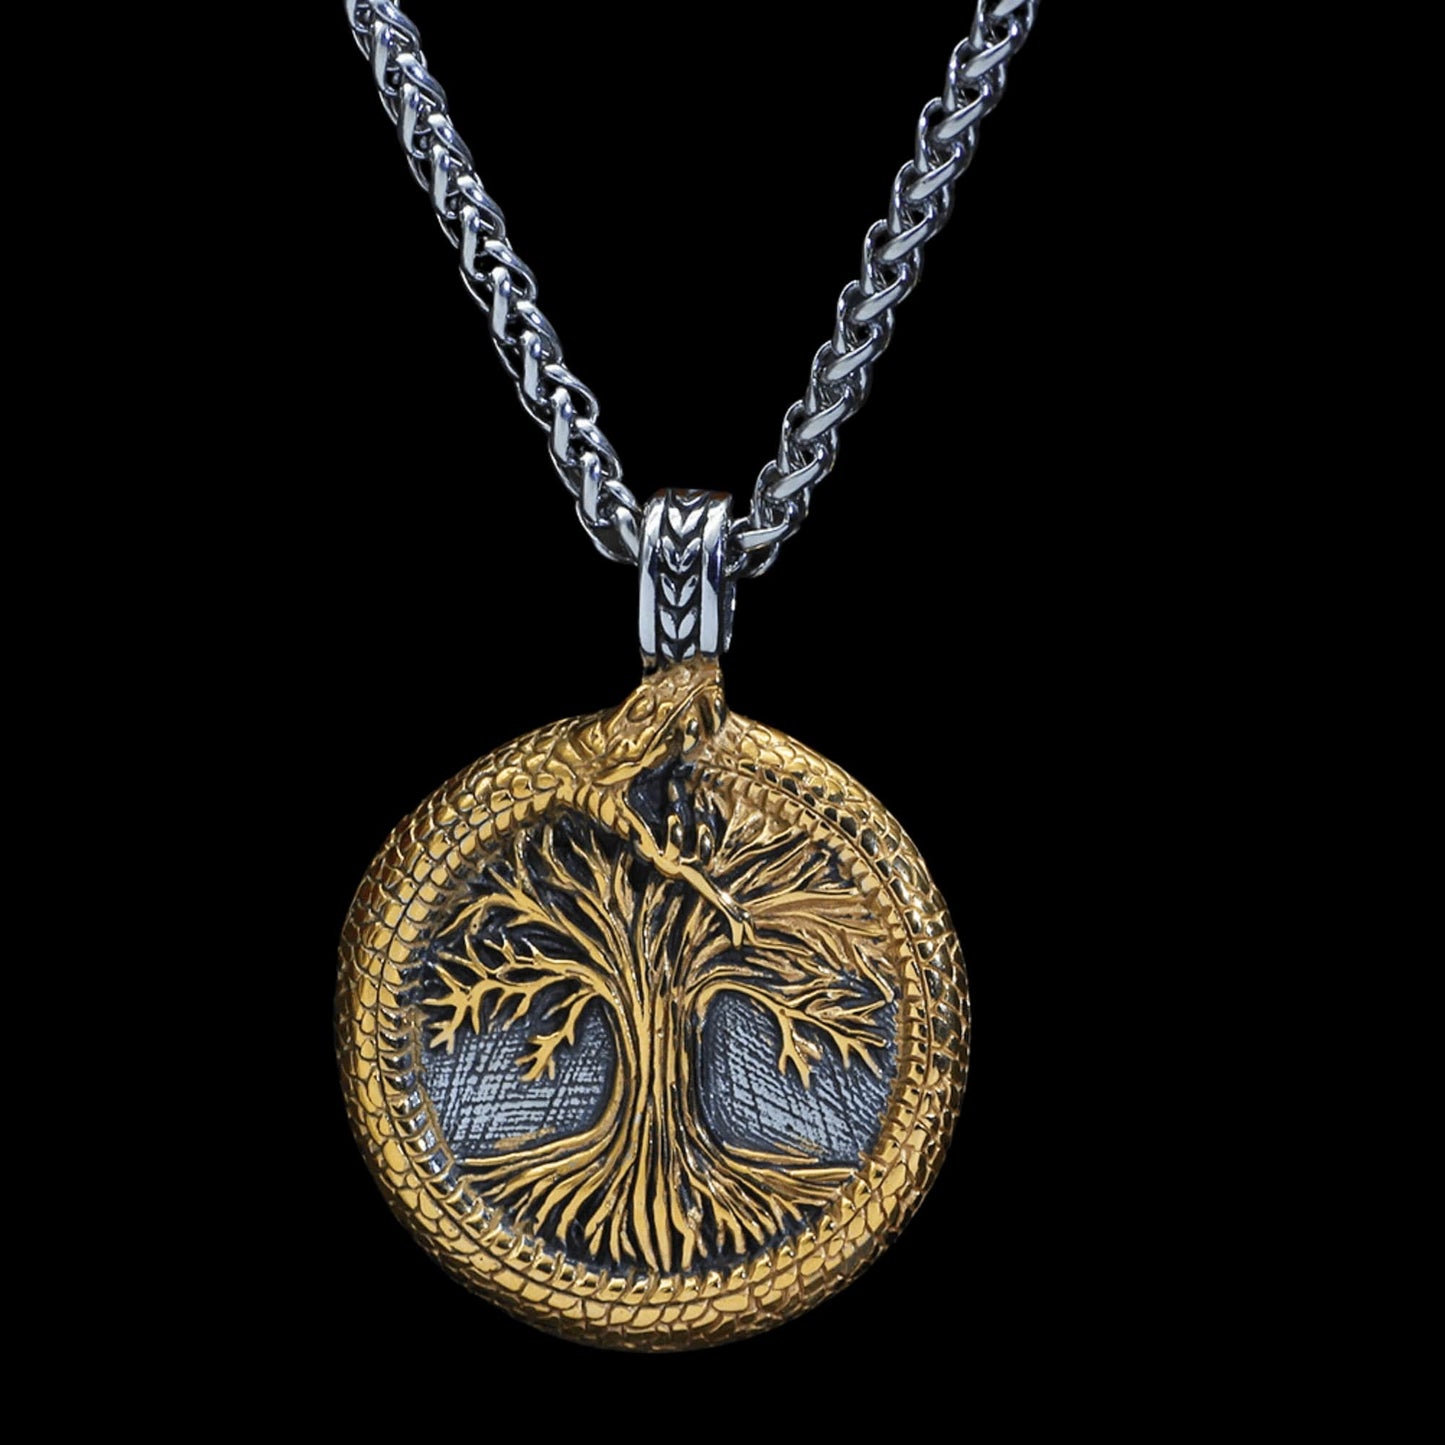 Golden Yggdrasil and Ouroboros Necklace